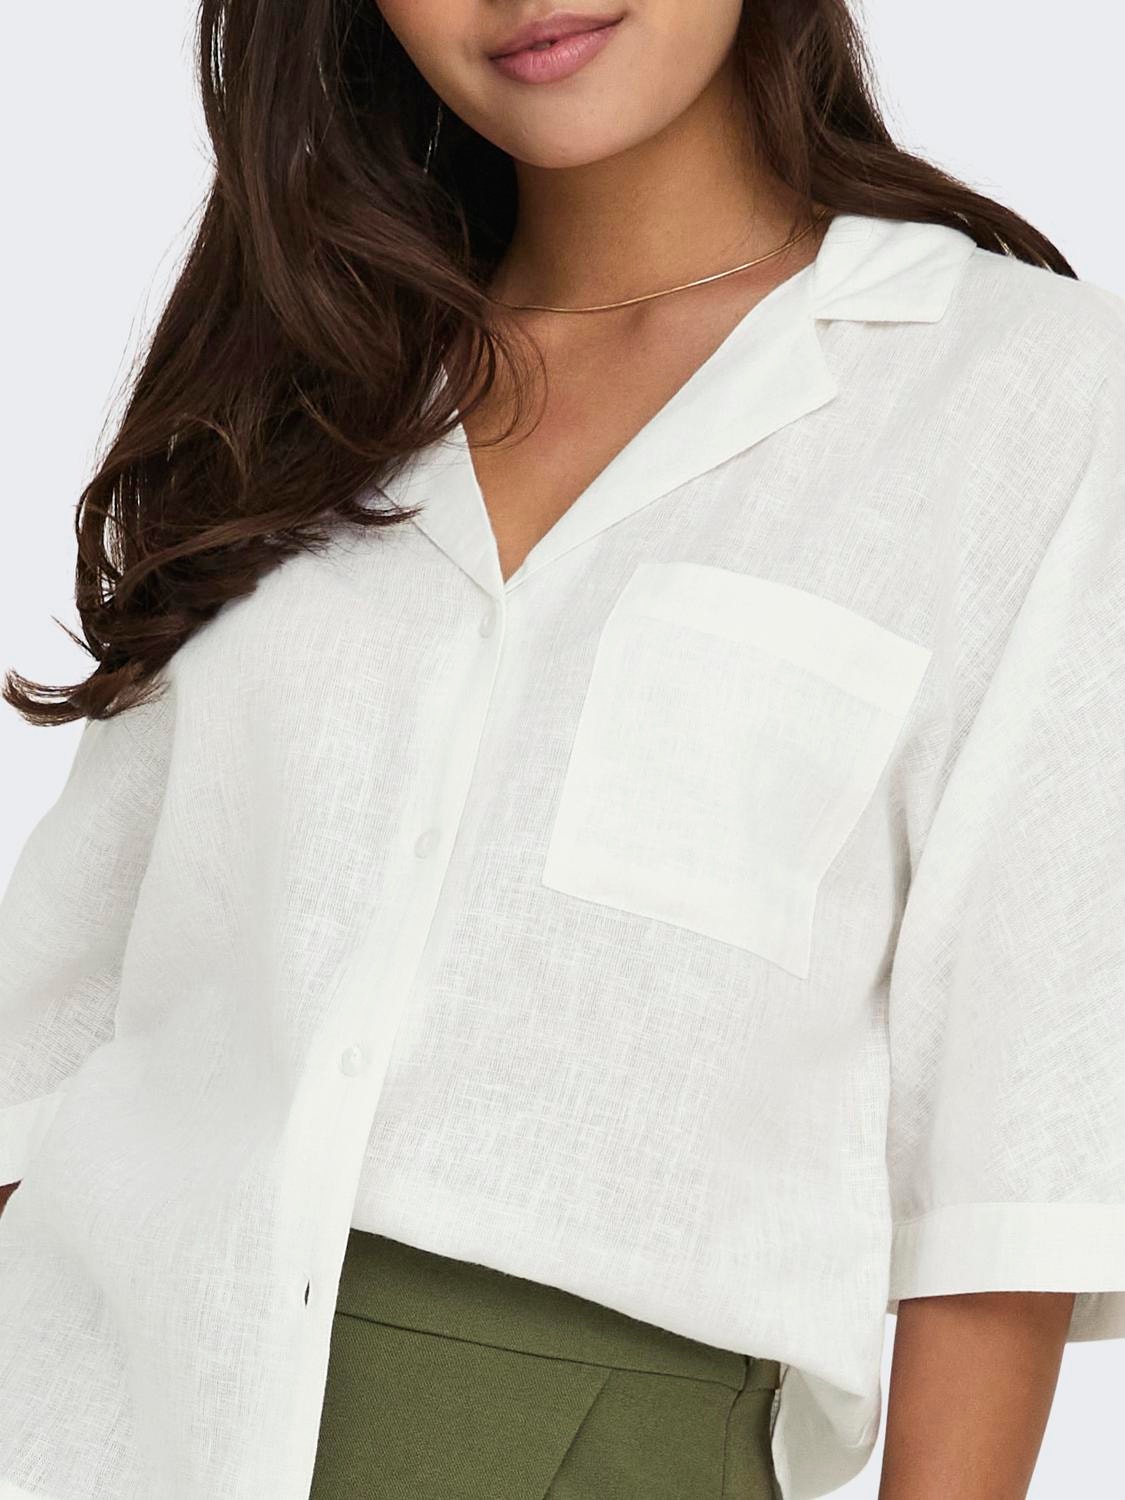 ONLY Camisas Corte regular Cuello de camisa Mangas voluminosas -Bright White - 15314215